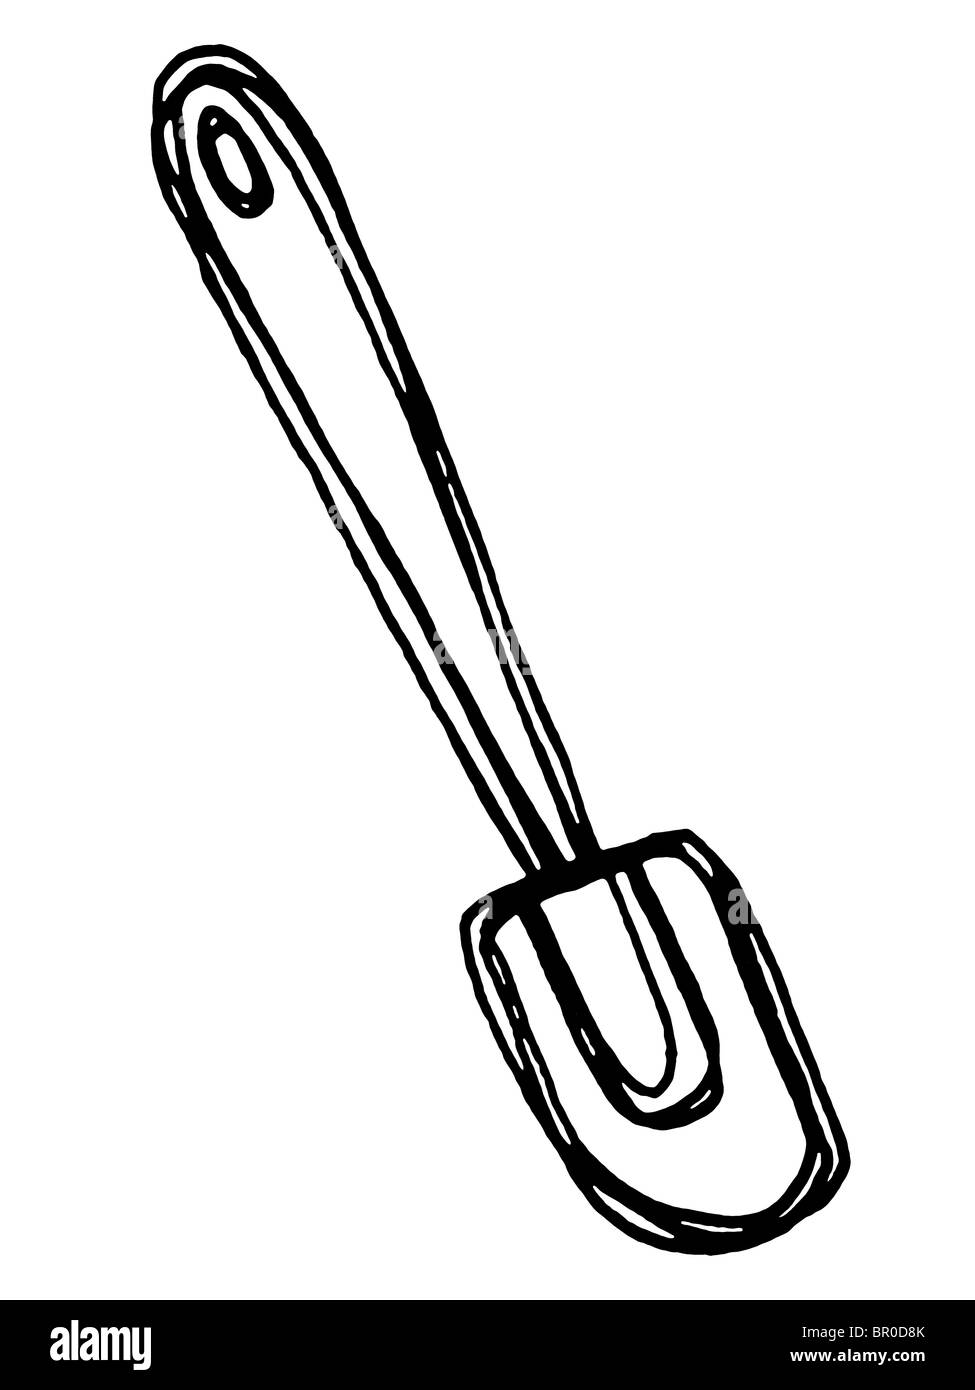 https://c8.alamy.com/comp/BR0D8K/a-black-and-white-illustration-of-a-rubber-spatula-BR0D8K.jpg